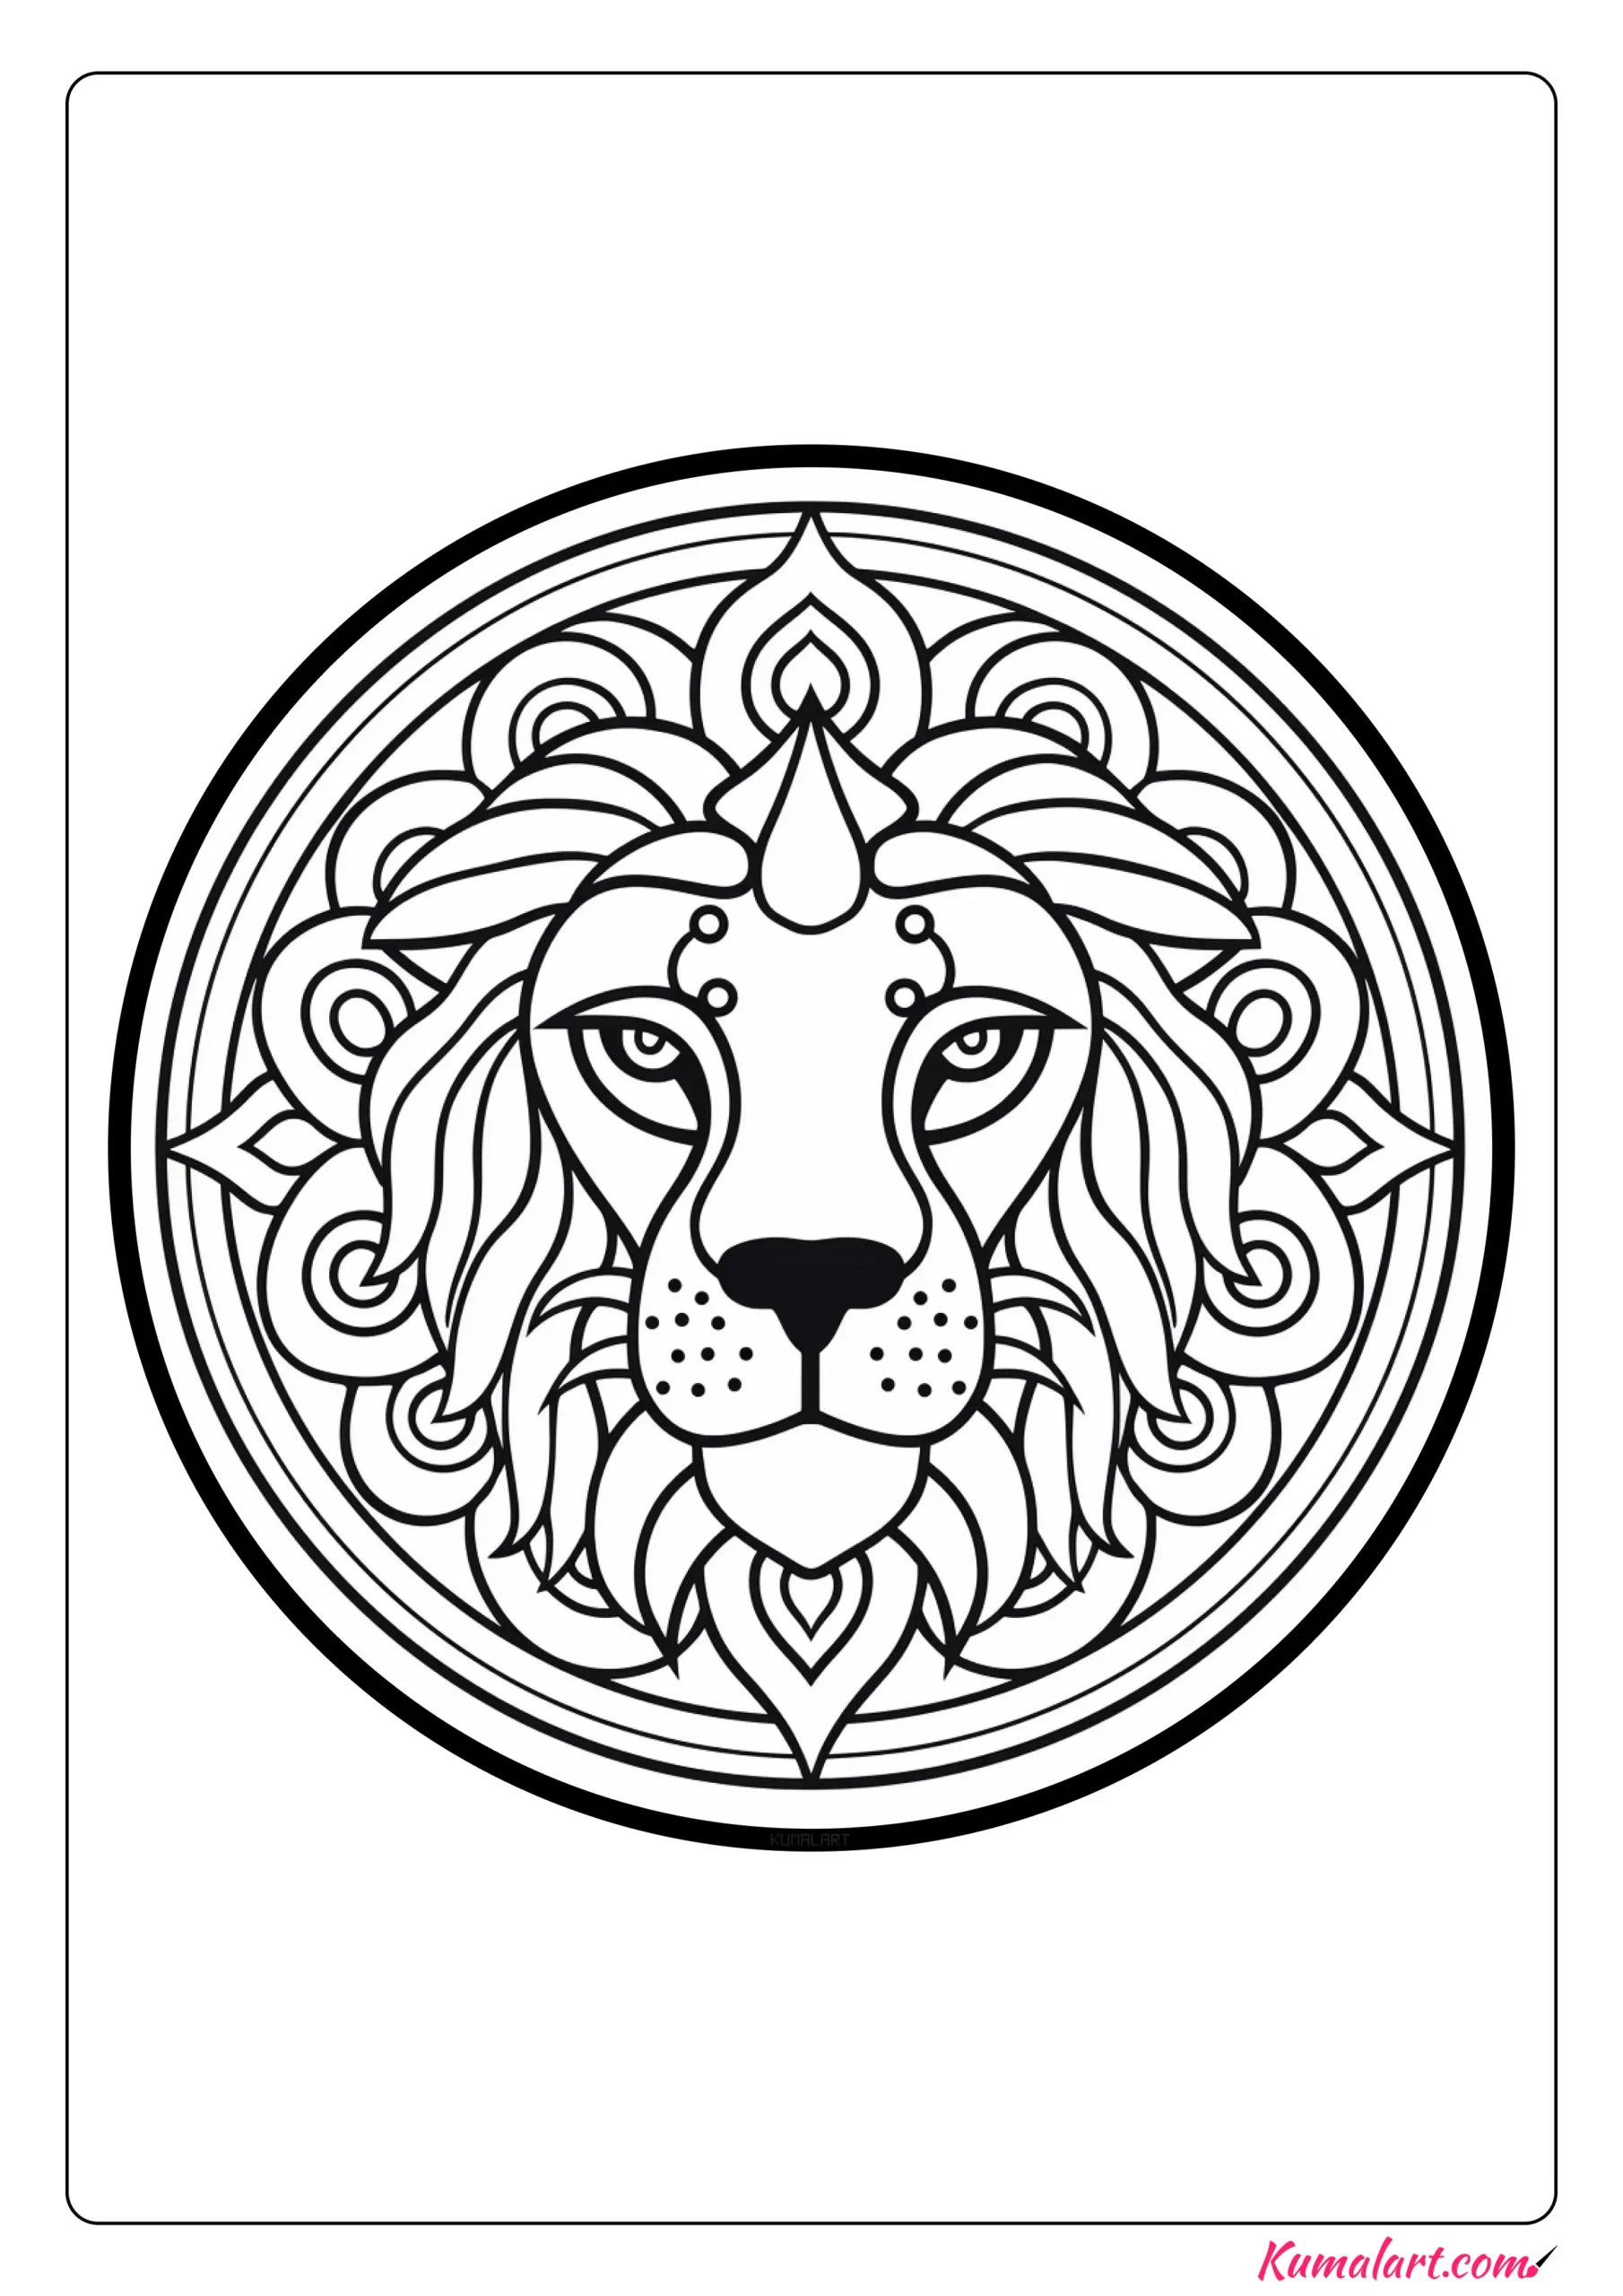 Zara the Lion Mandala Coloring Page